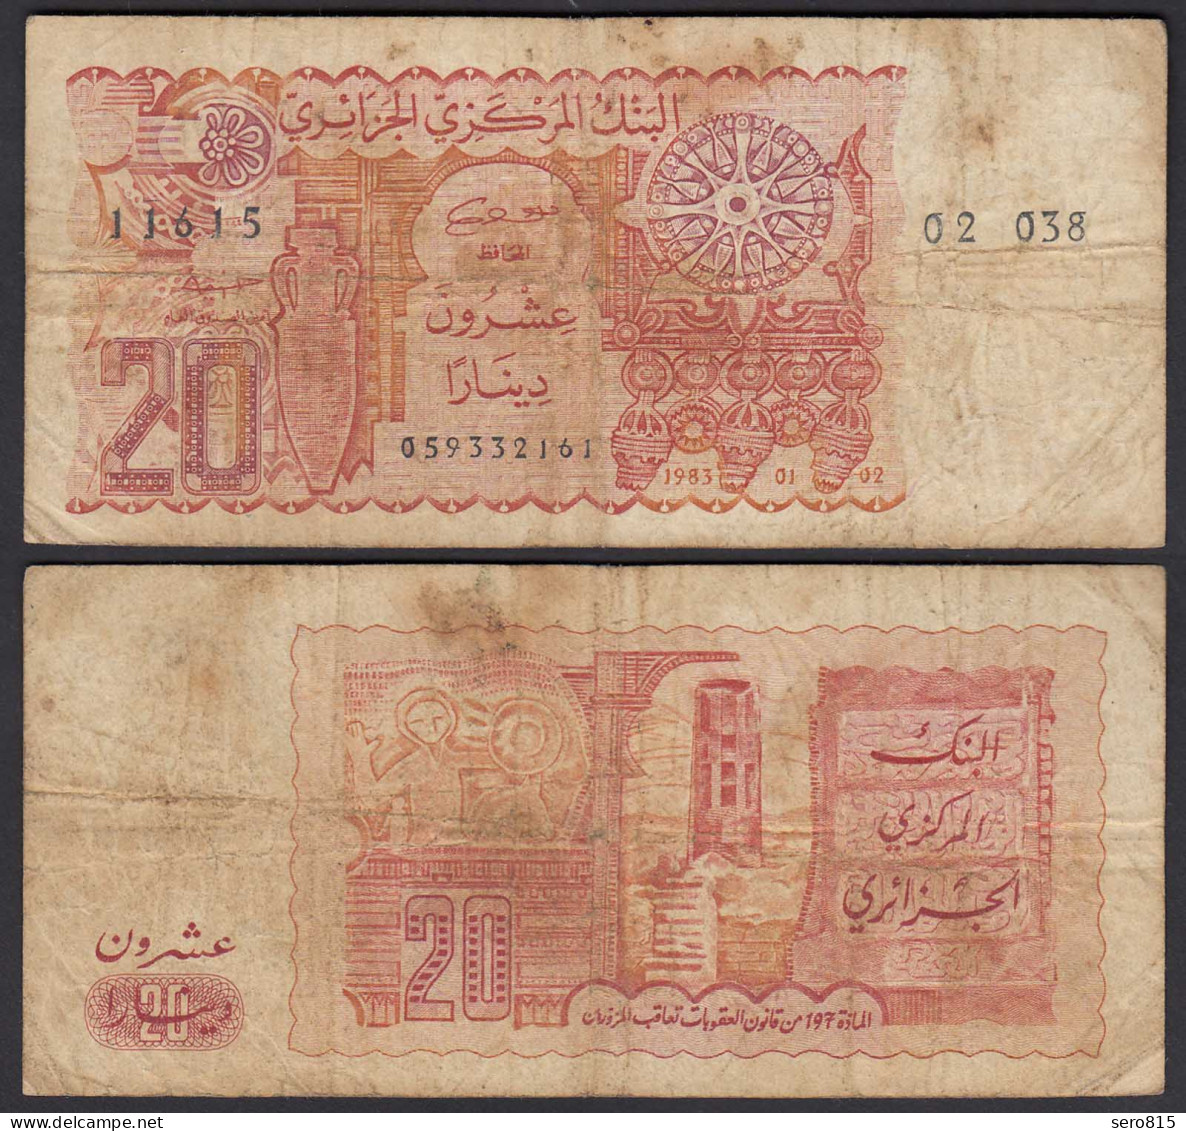 ALGERIEN - ALGERIA 20 Dinars Banknote 1983 Pick 133a VG (5)   (25215 - Other - Africa